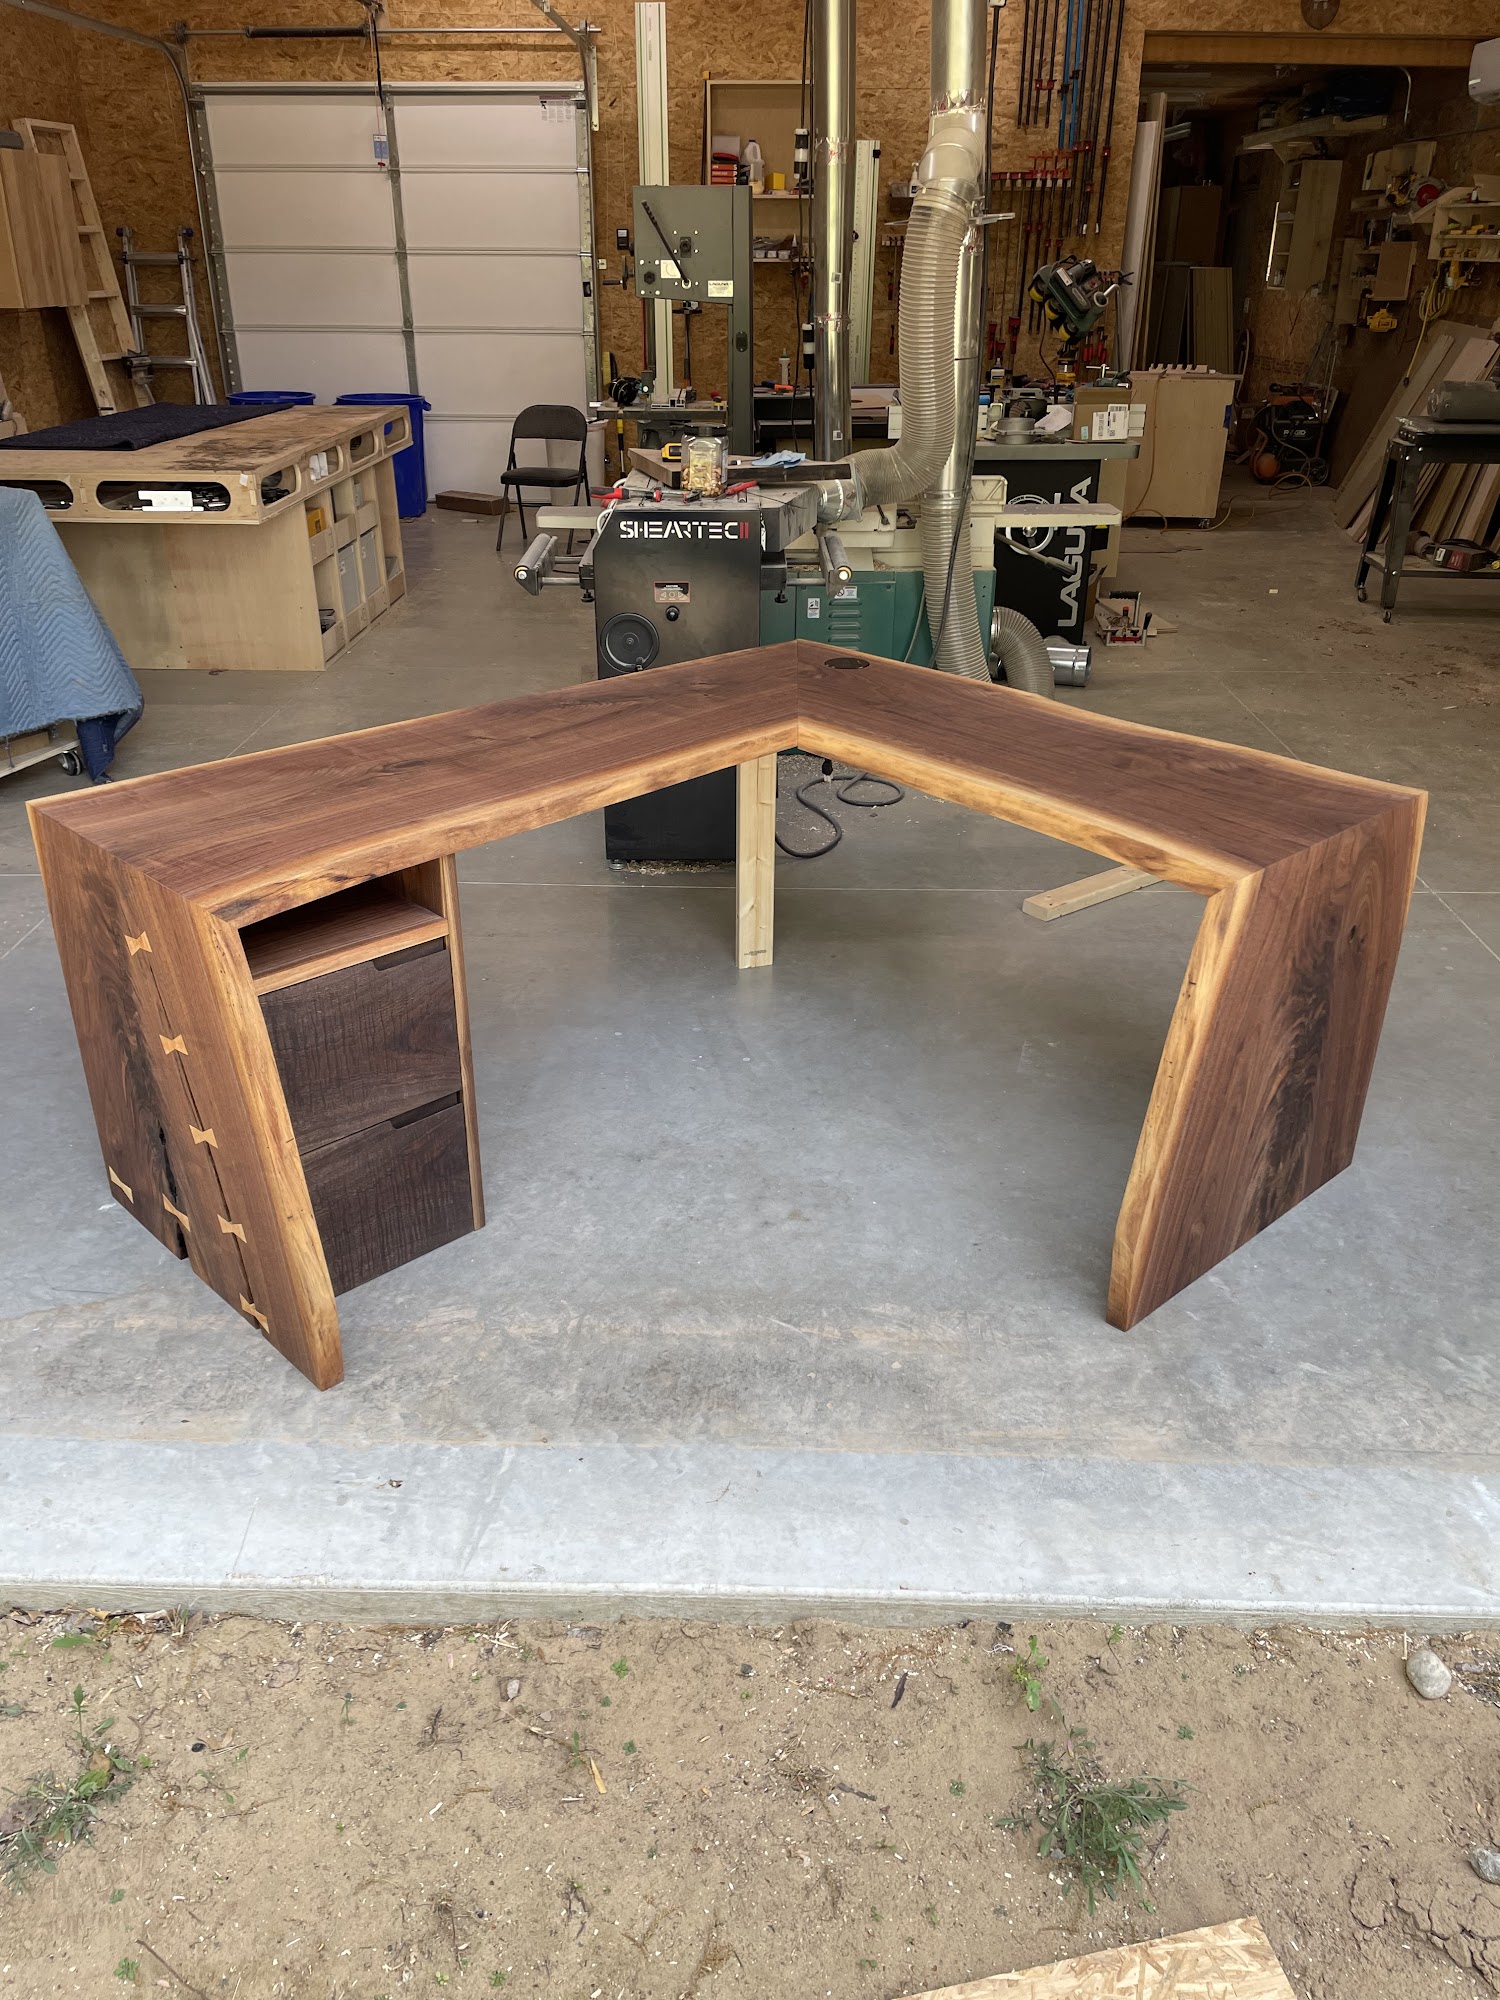 Bearded Moose Woodworking: Custom Cabinets, Built-Ins & Furniture | Grand Rapids, MI 2579 136th Ave, Dorr Michigan 49323